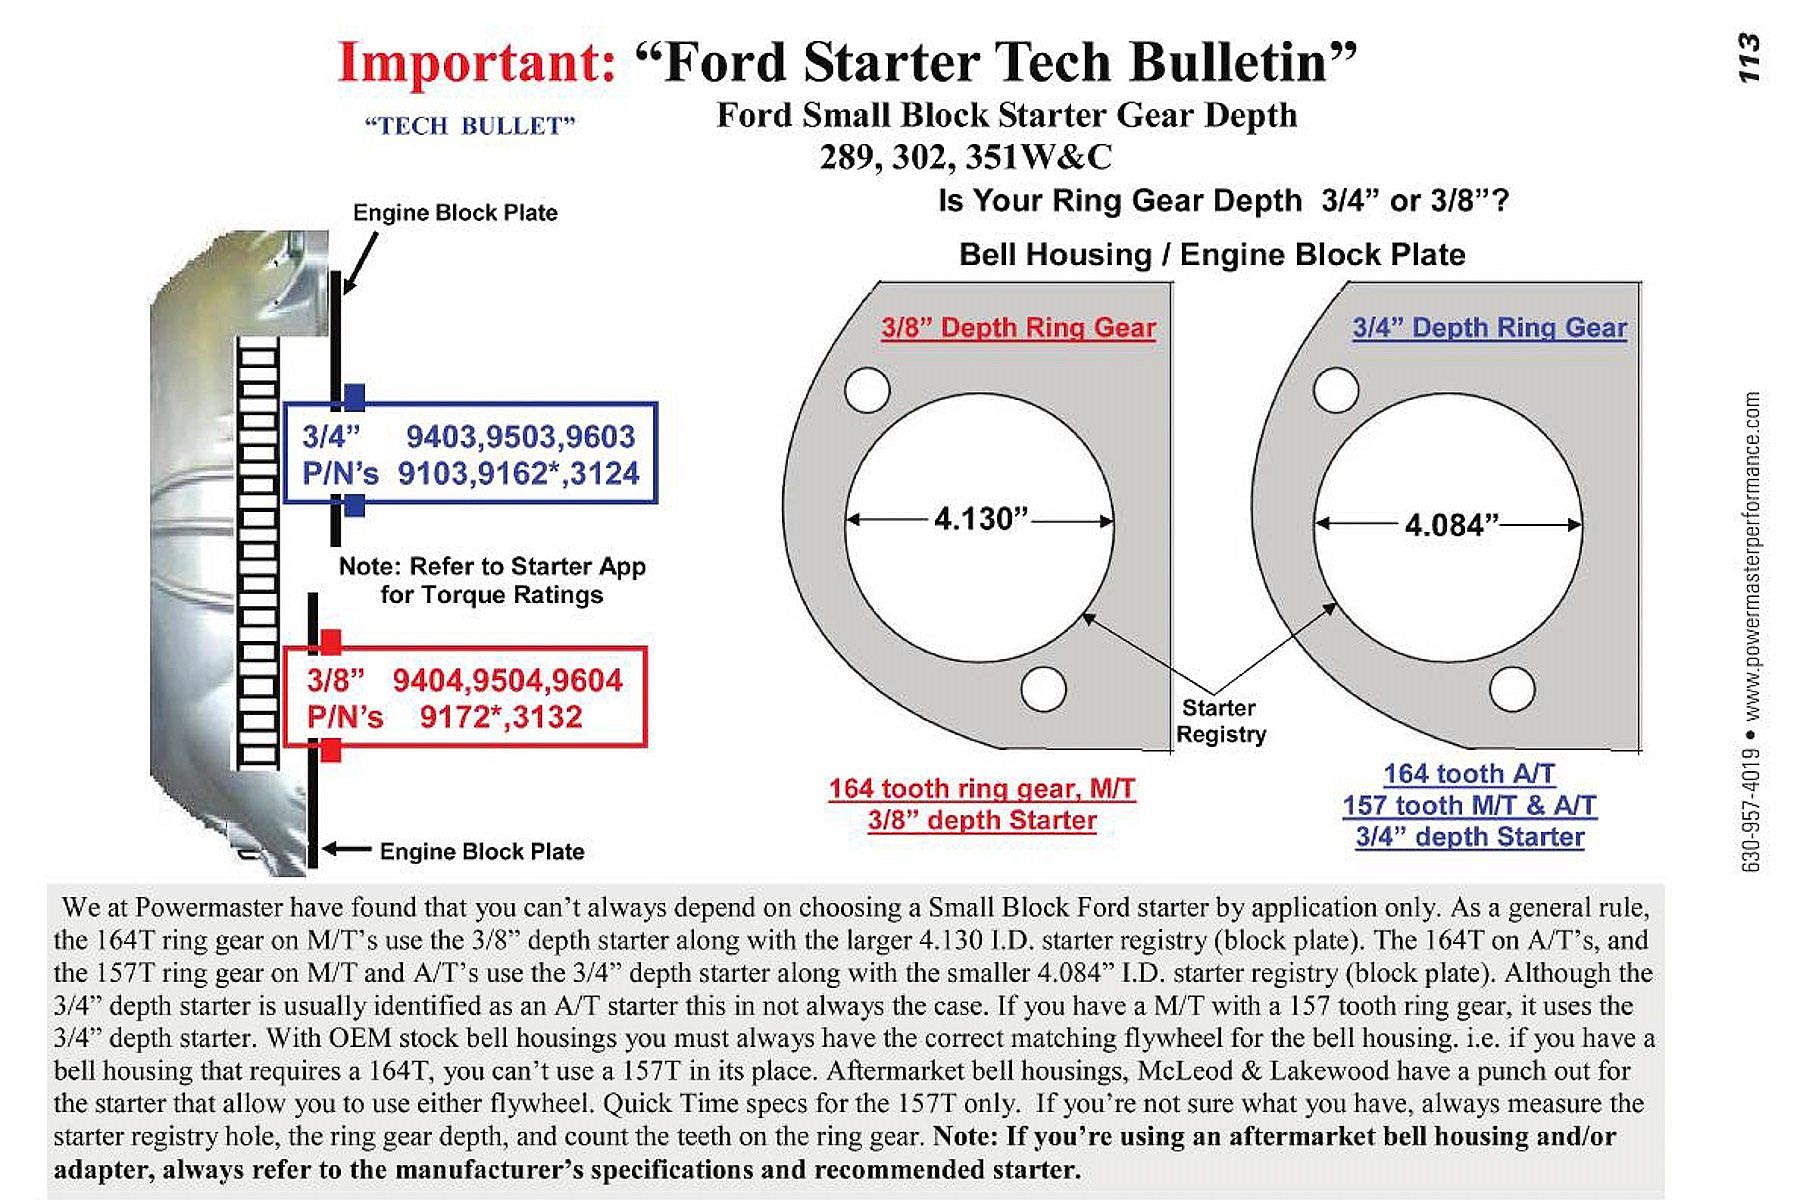 tips-for-installing-ford-starters-from-powermaster-2021-05-17_08-09-26_350907.jpg